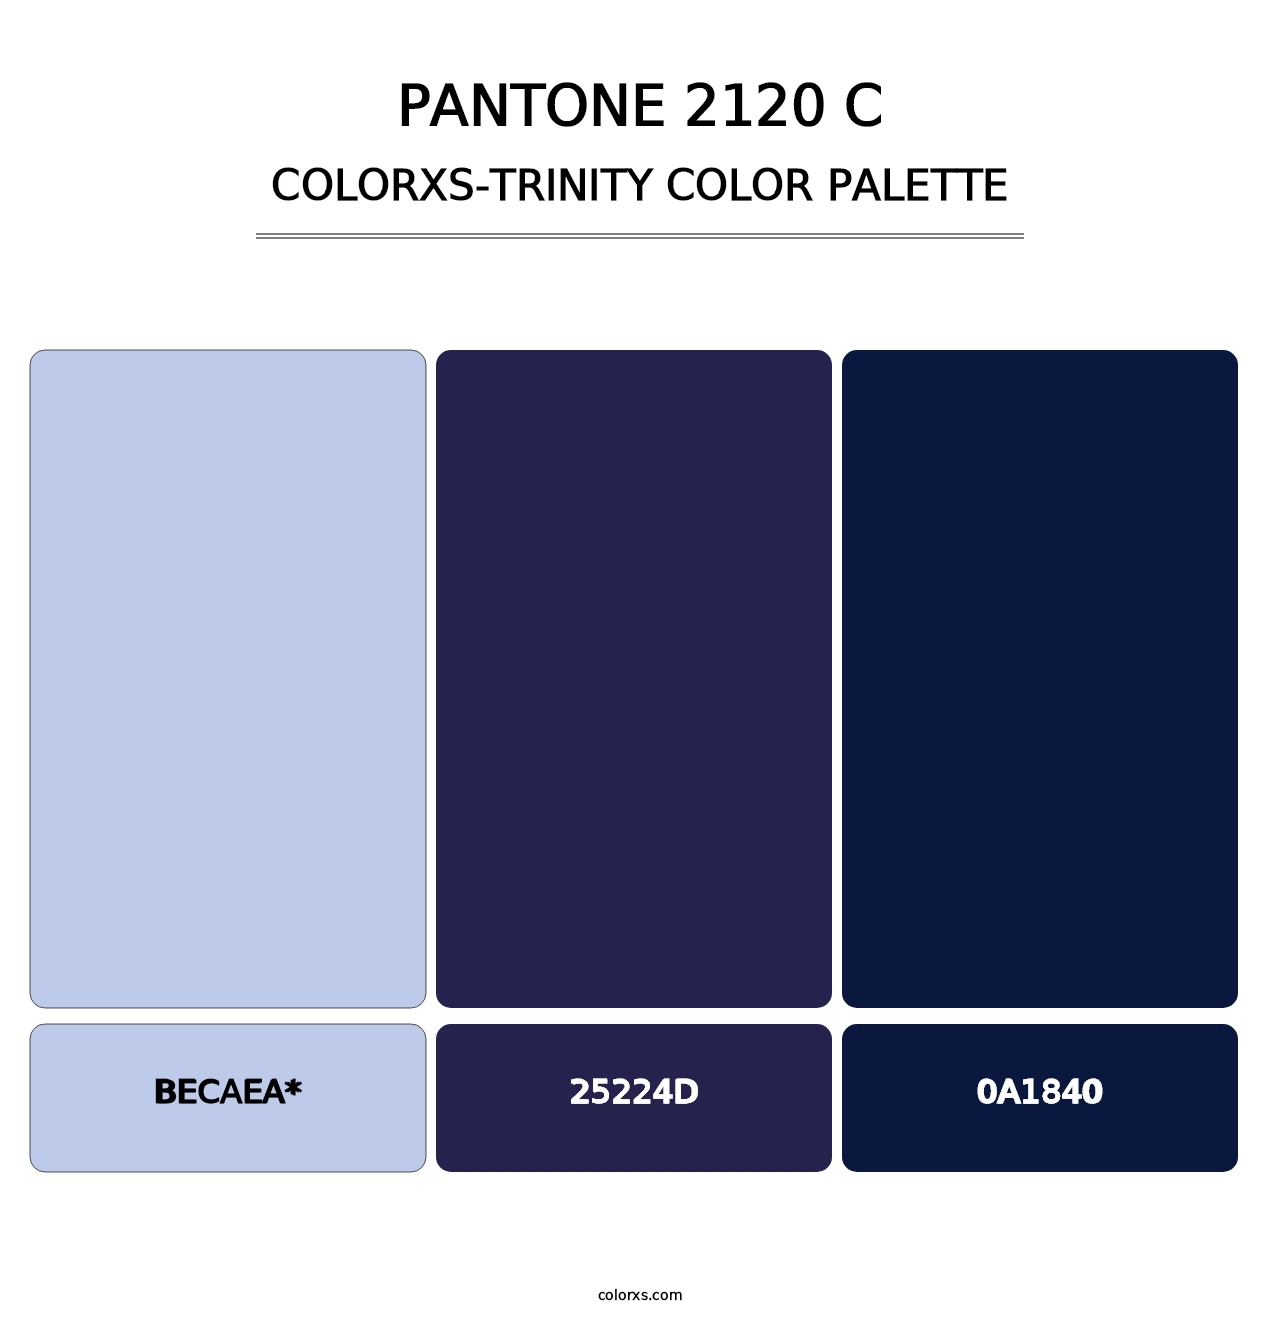 PANTONE 2120 C - Colorxs Trinity Palette